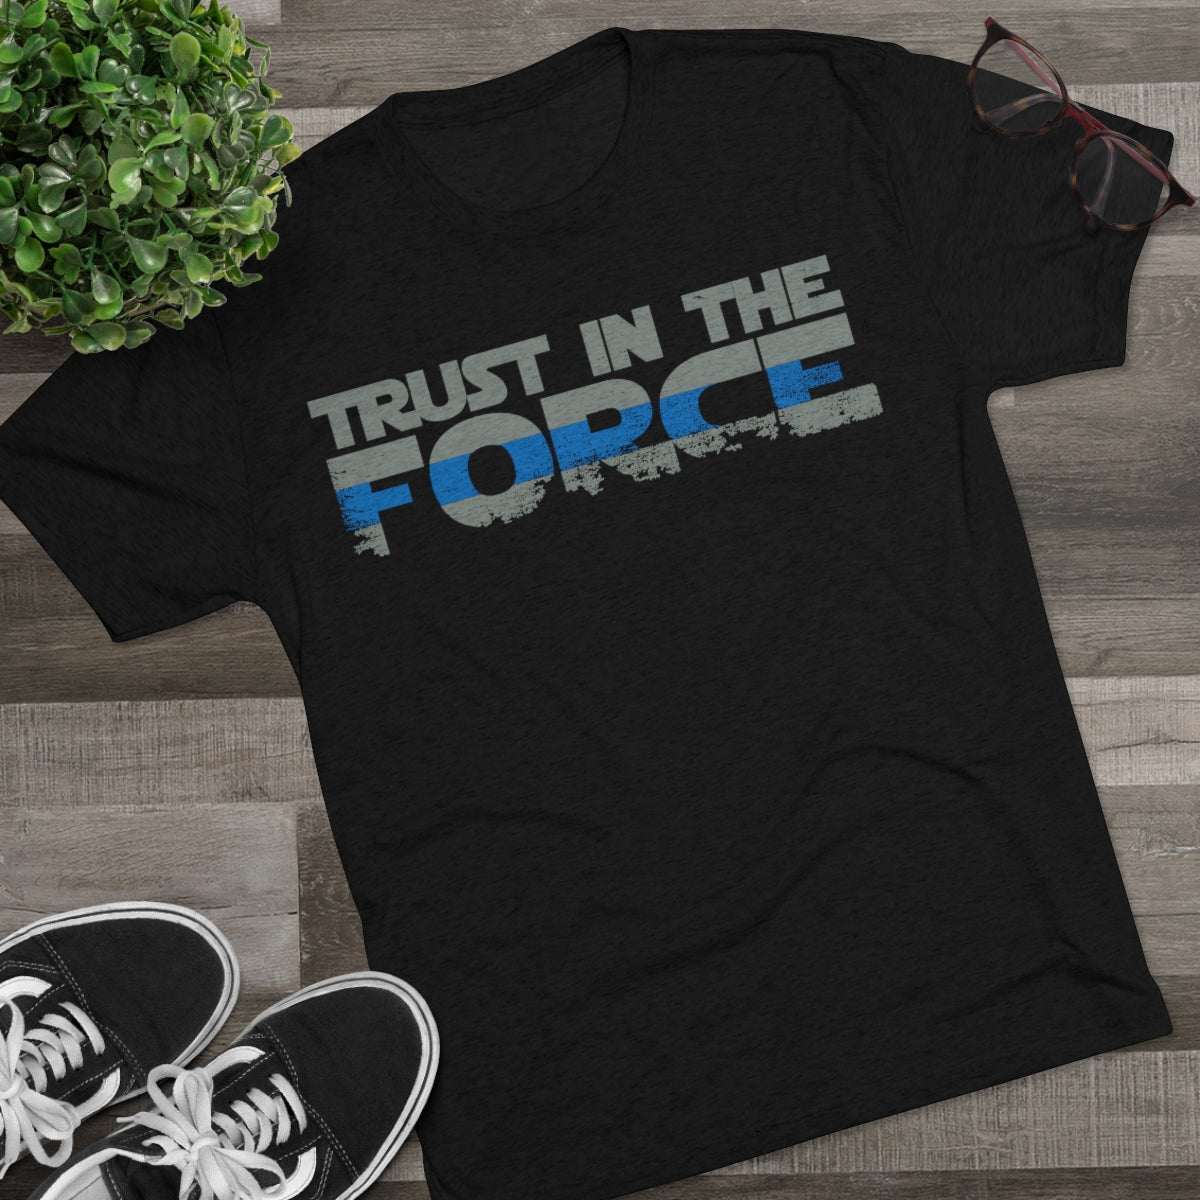 Unisex Tri-Blend Crew Tee - Trust the Force